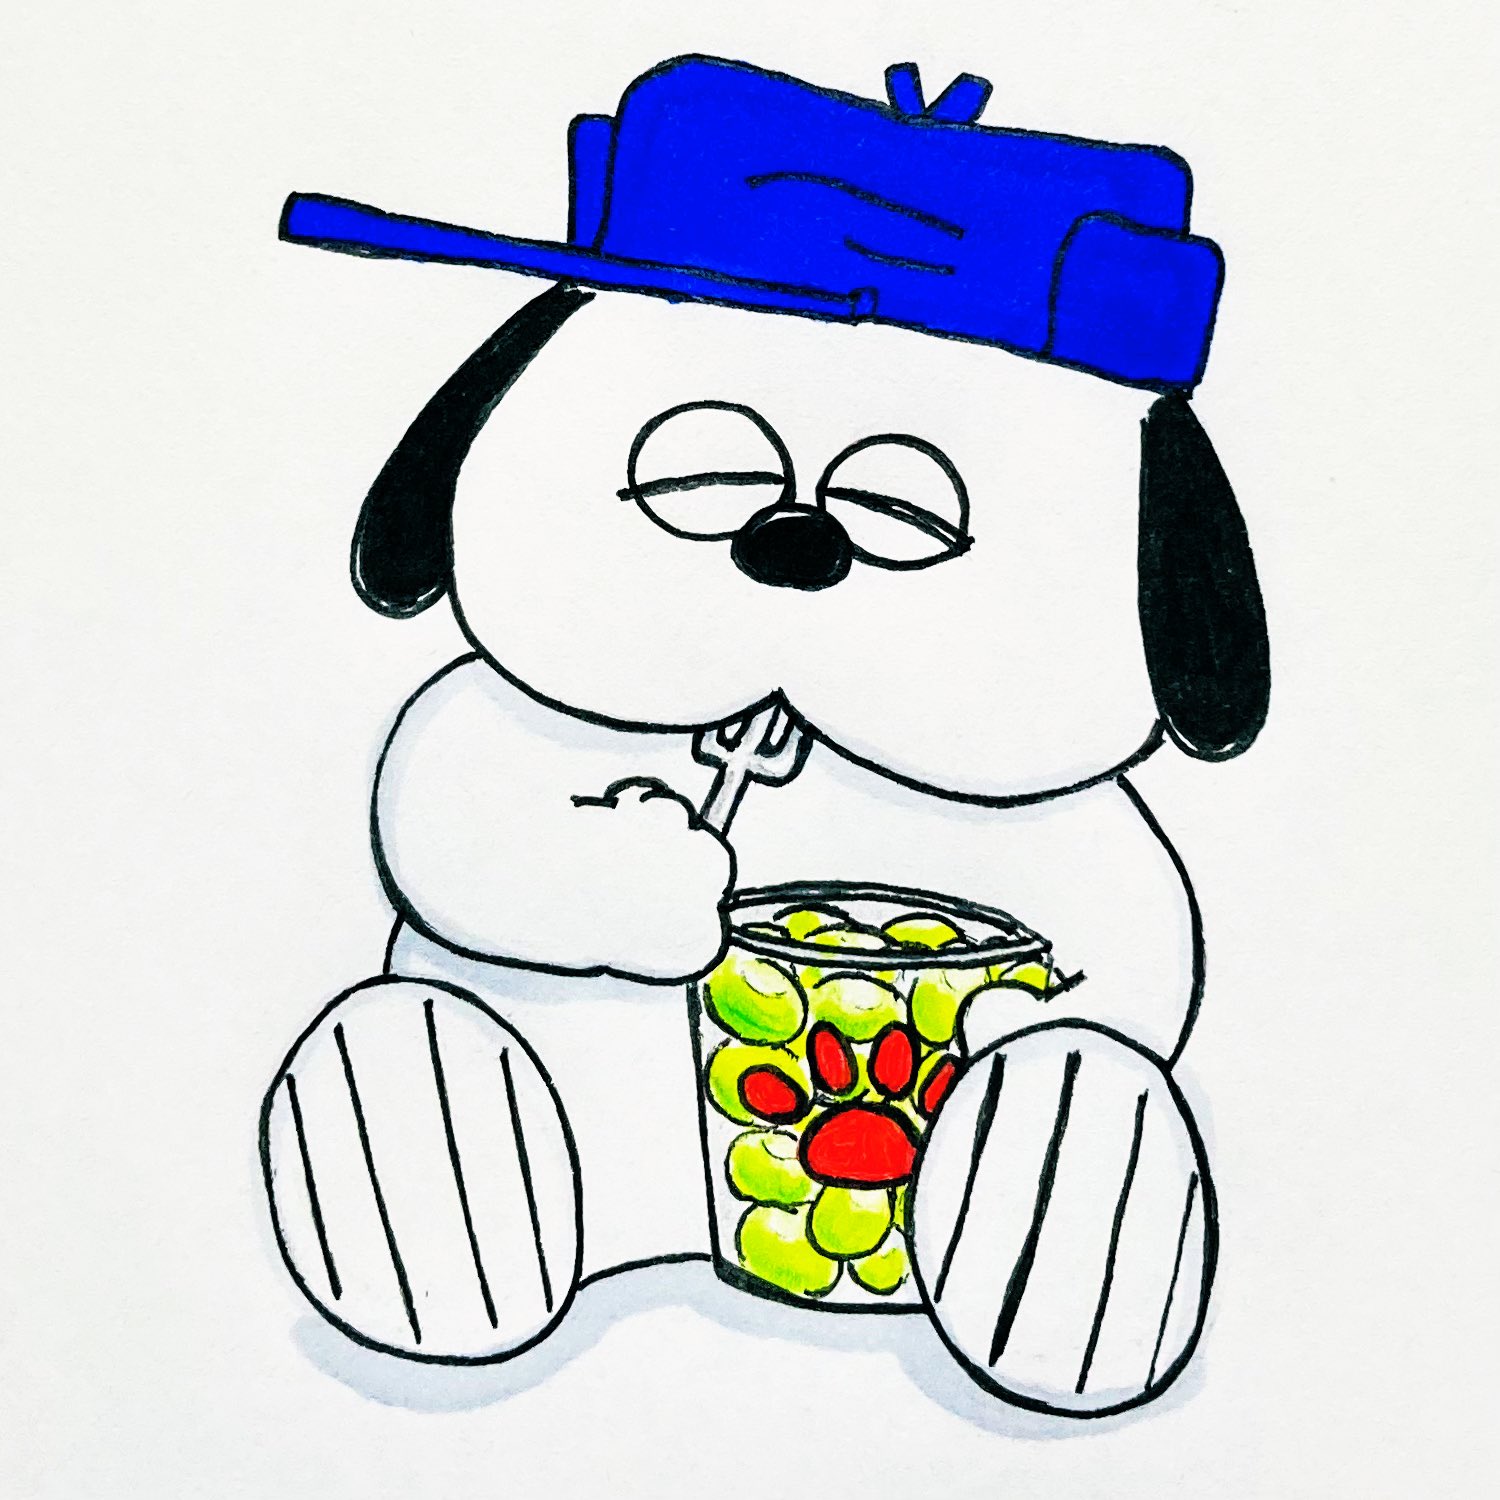 Wlfa Snoopy Auf Twitter Day261 シャインマスカットを食べるオラフ 100日後も食べるオラフ アナログイラスト T Co Qpsh3dmy5d Twitter